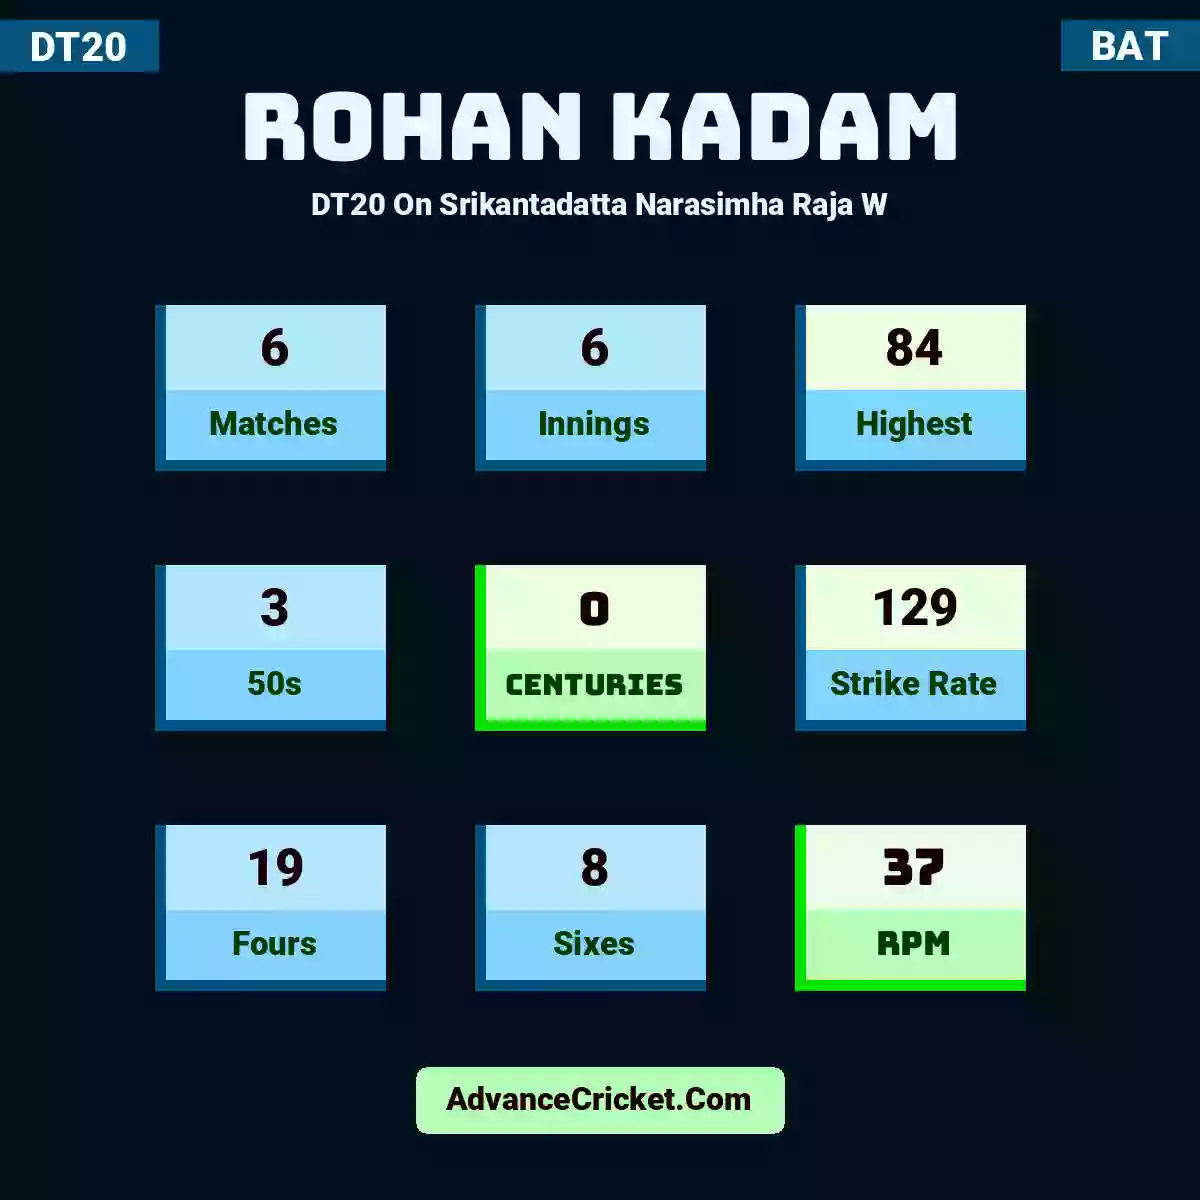 Rohan Kadam DT20  On Srikantadatta Narasimha Raja W, Rohan Kadam played 6 matches, scored 84 runs as highest, 3 half-centuries, and 0 centuries, with a strike rate of 129. R.Kadam hit 19 fours and 8 sixes, with an RPM of 37.